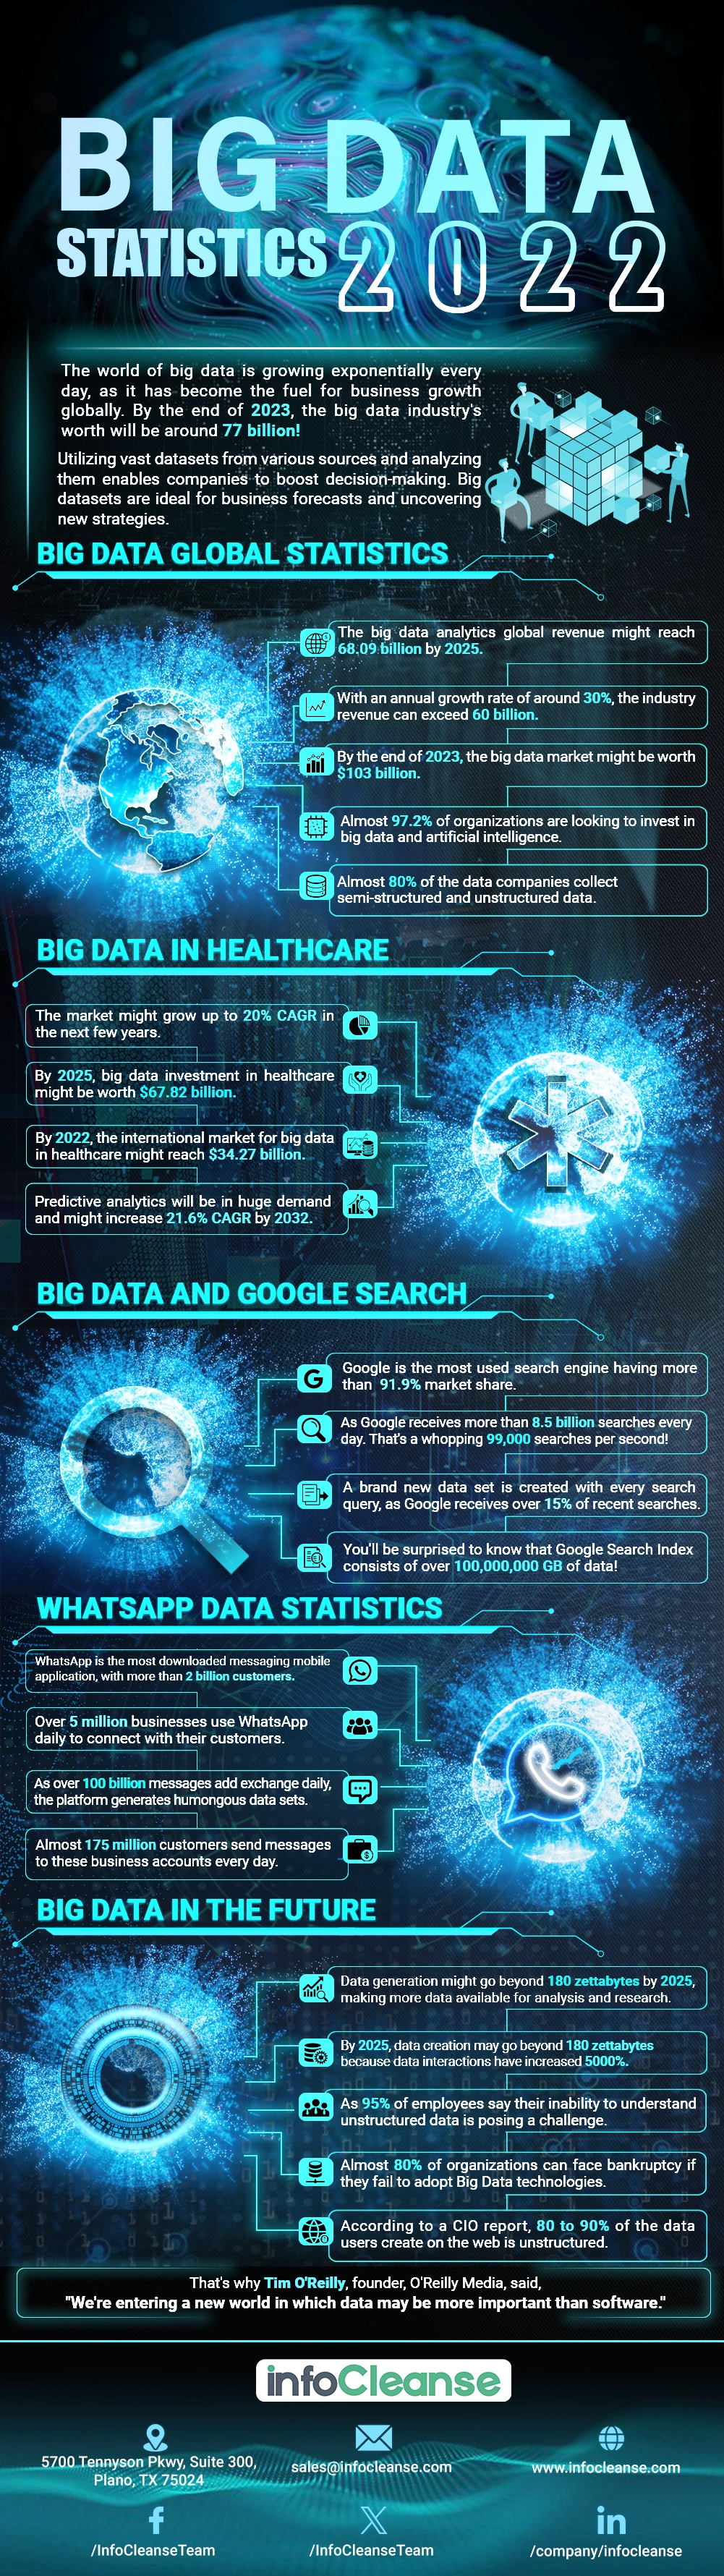 Big Data Statistics 2022- InfoCleanse